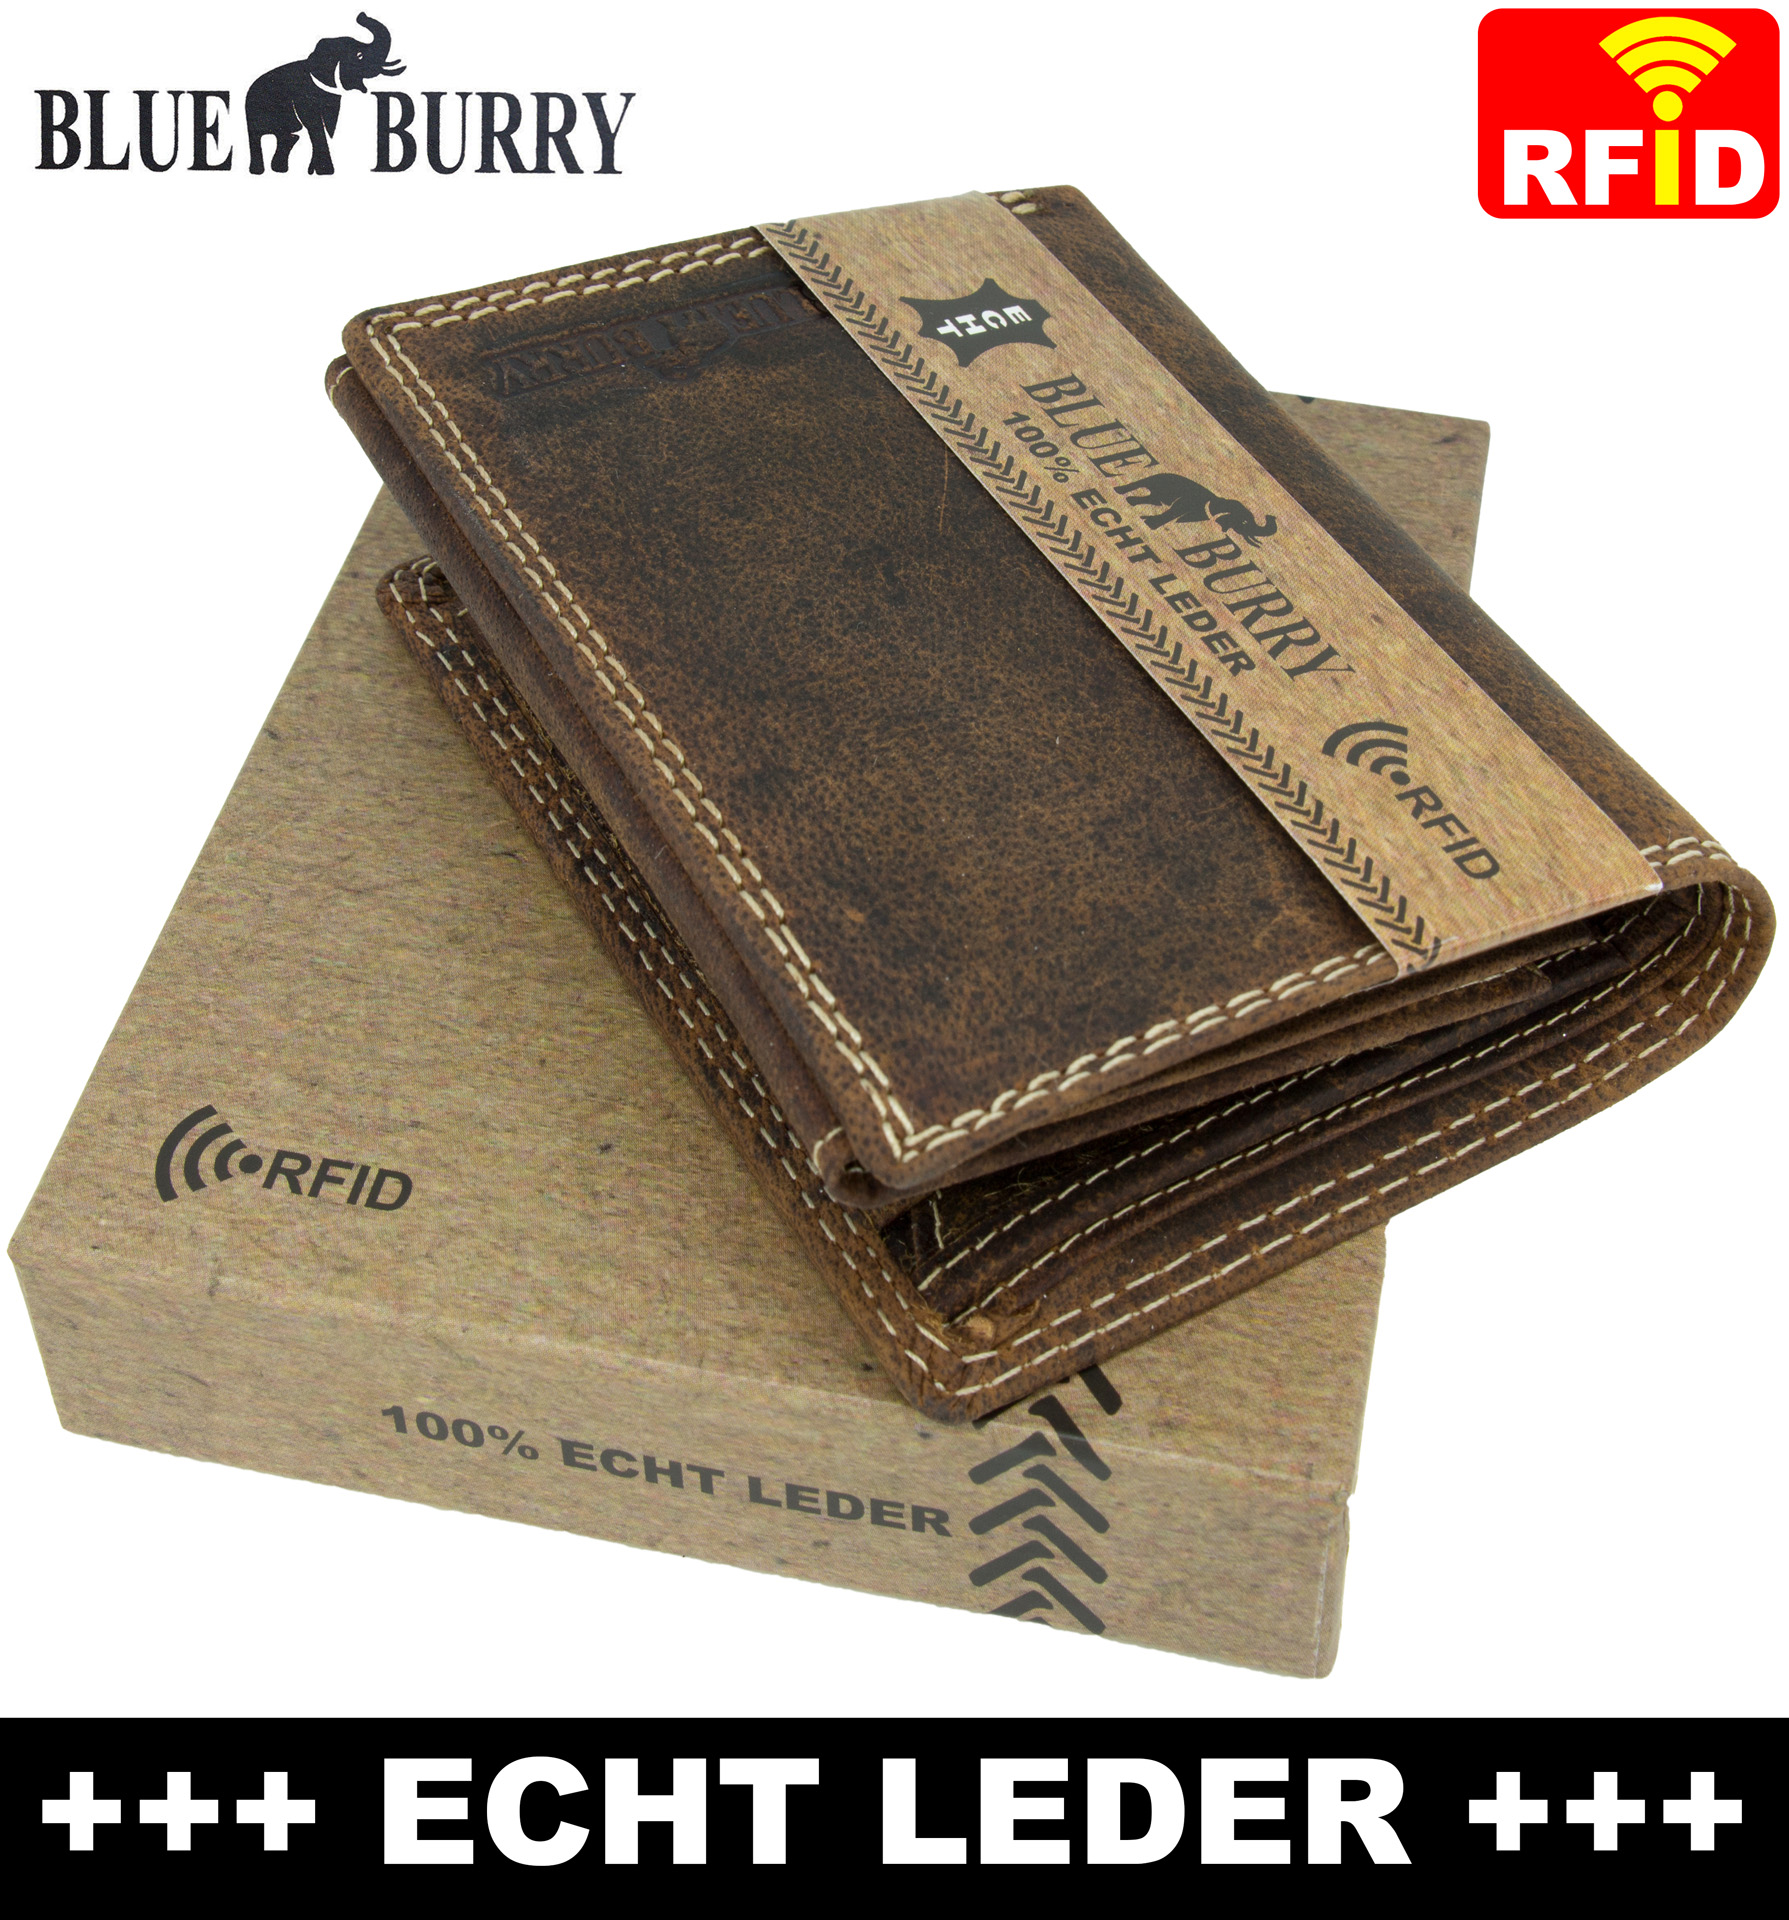 Echtleder 089 Blue Burry Herren Lederbörse RFID-Schutz Portemonnaie Geldbörse 